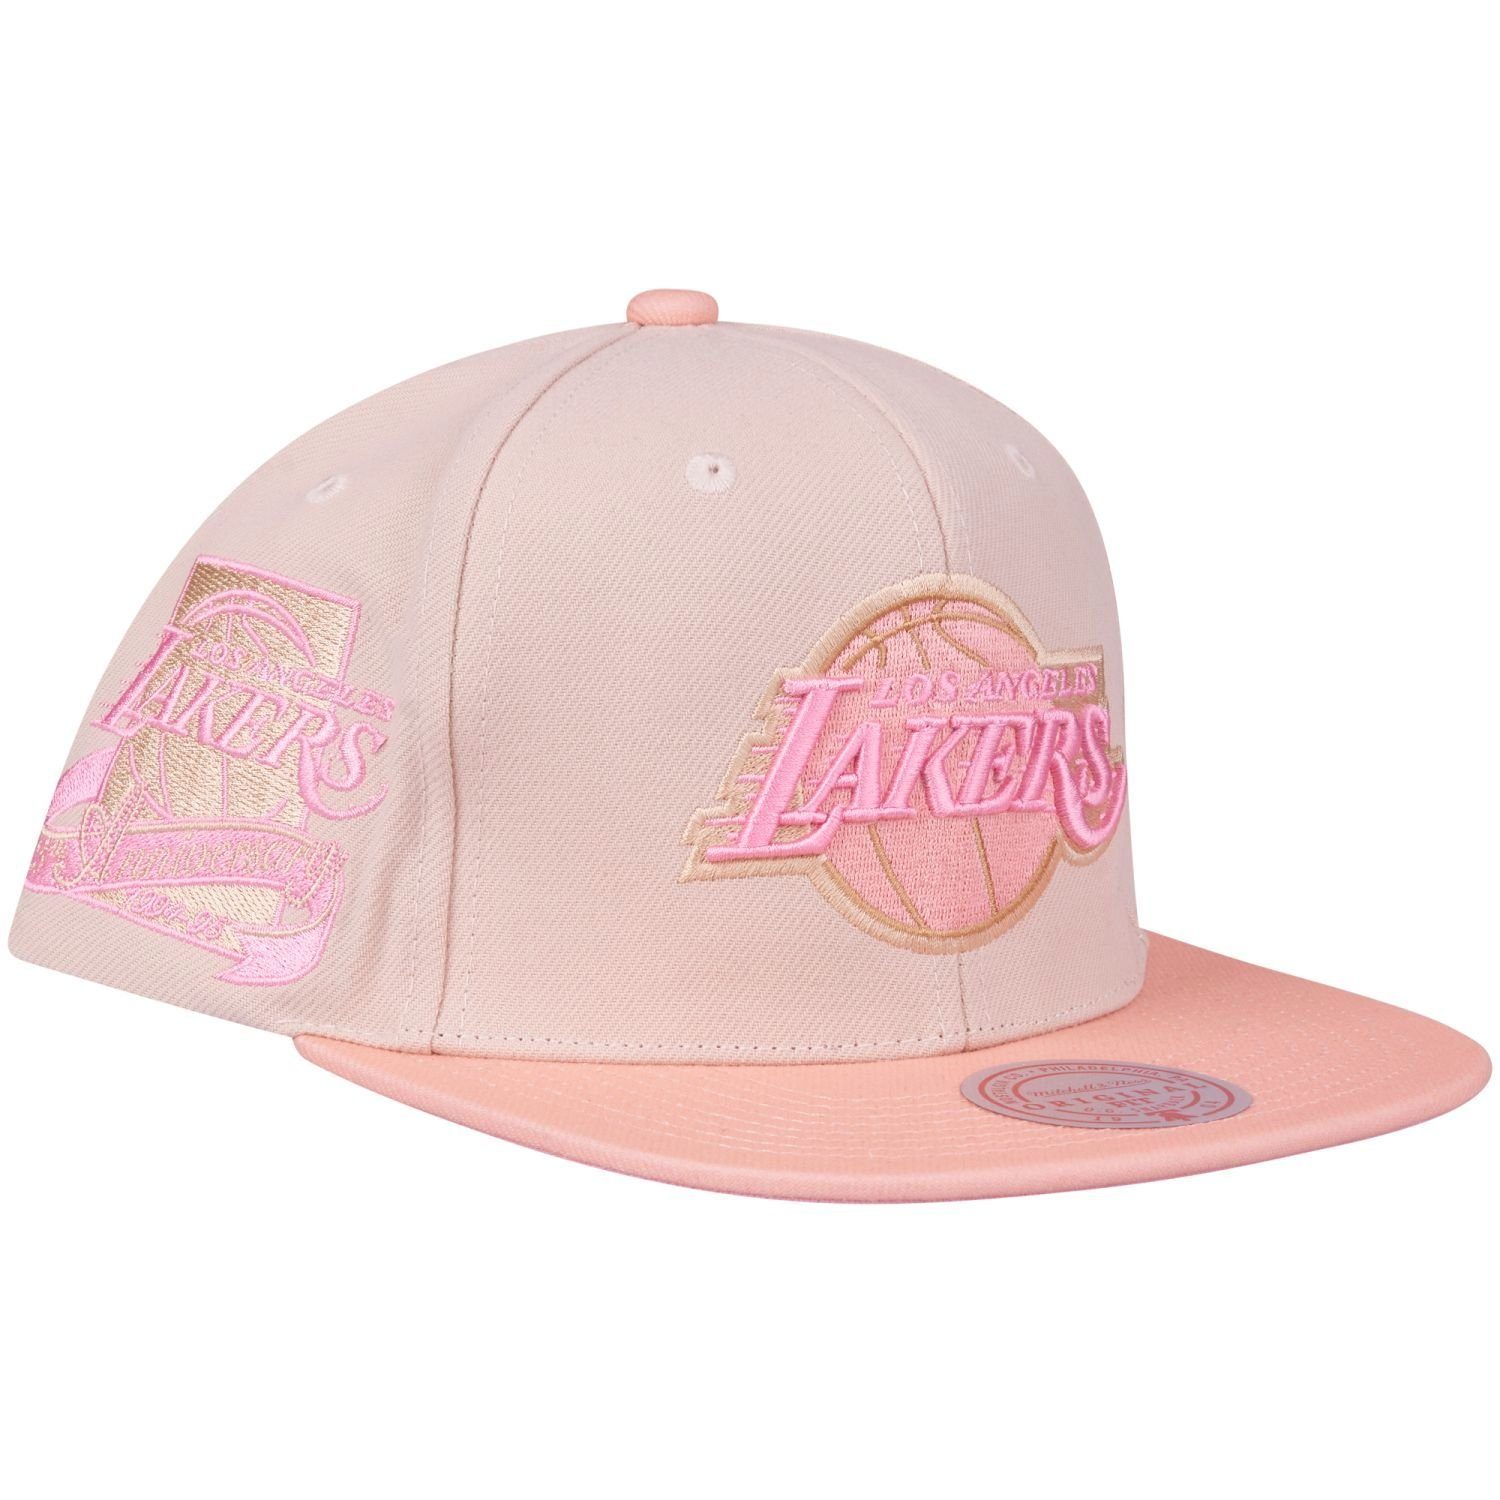 Mitchell & Ness Snapback Cap LOVERS LANE Los Angeles Lakers | Snapback Caps